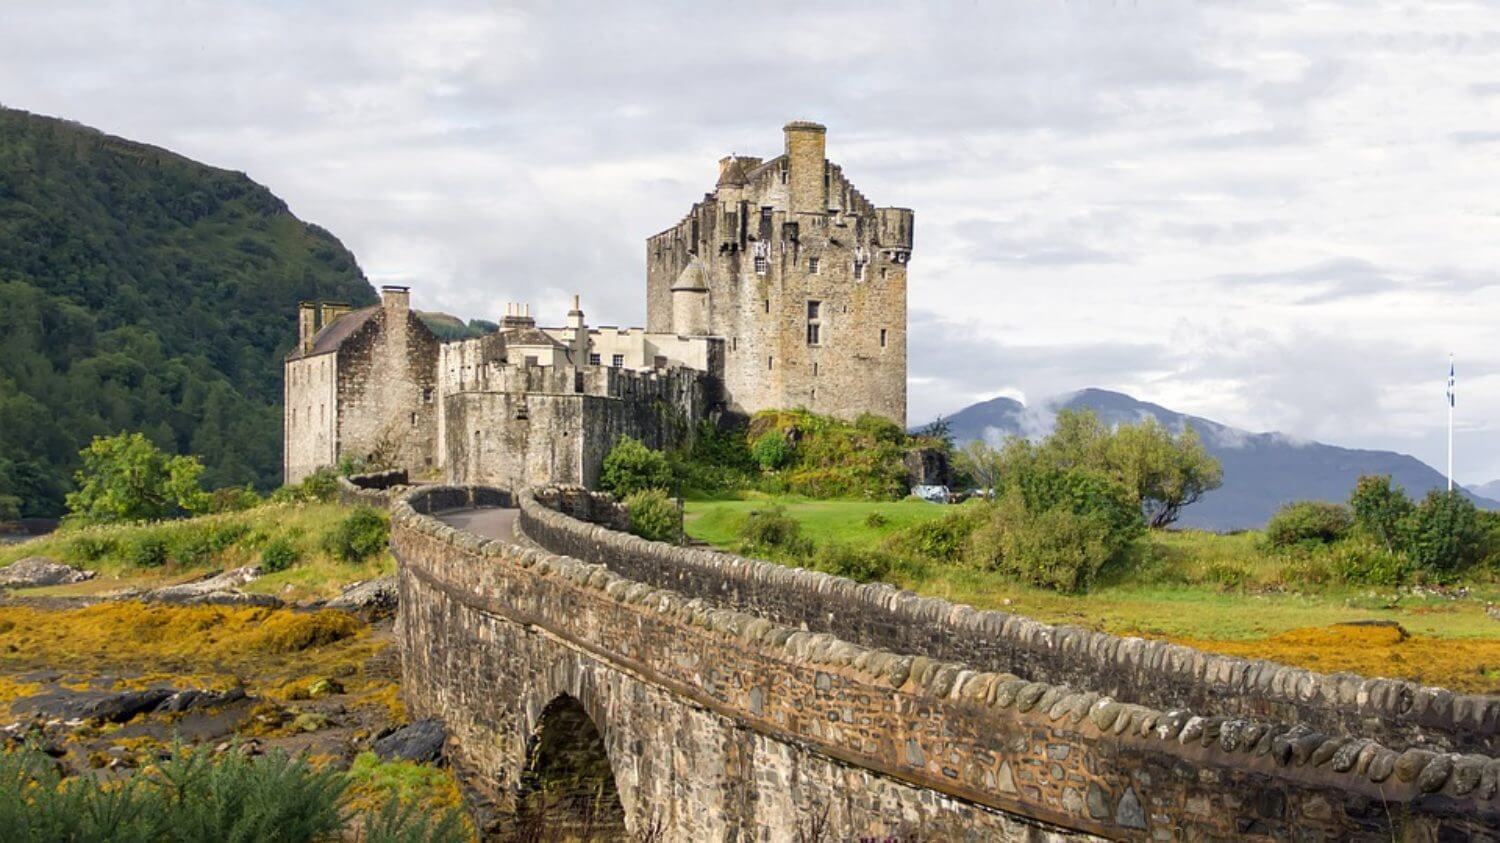 Eilean Donan Castle - Image by XtianDuGard from Pixabay